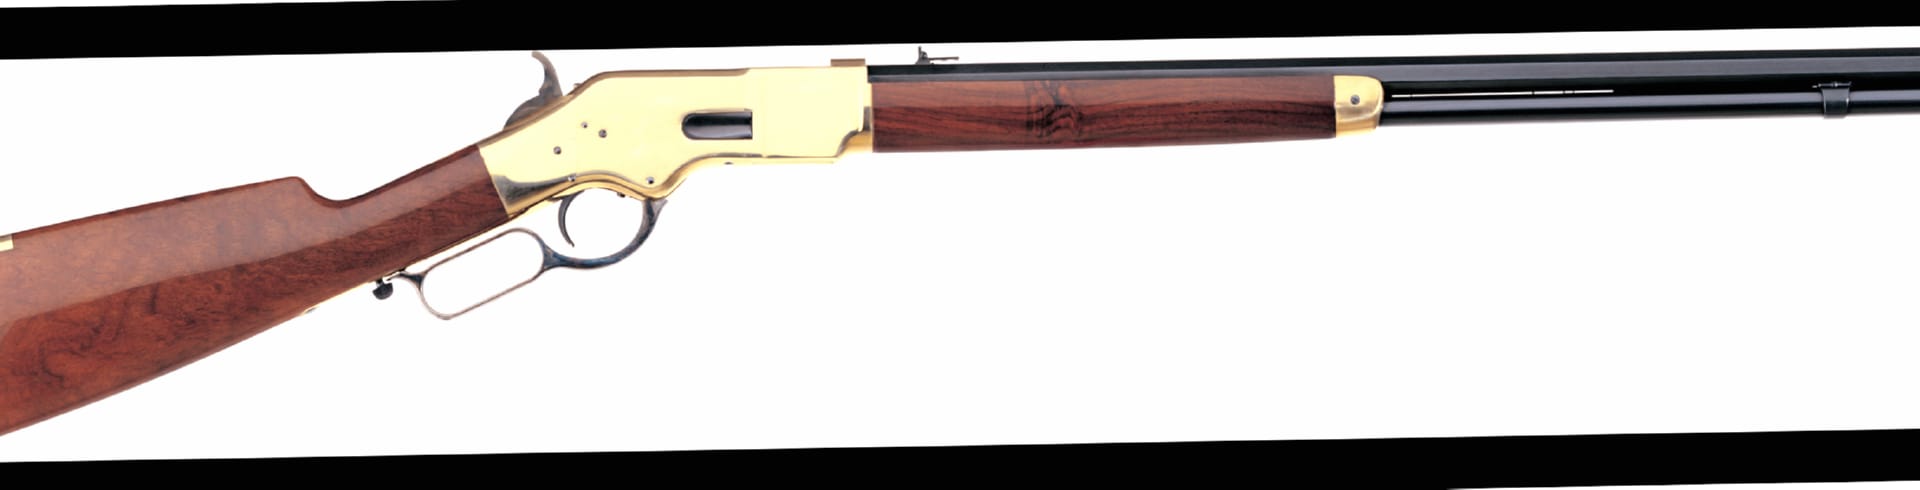 Uberti 1866 Yellowboy Rifle at 640 x 1136 iPhone 5 size wallpapers HD quality